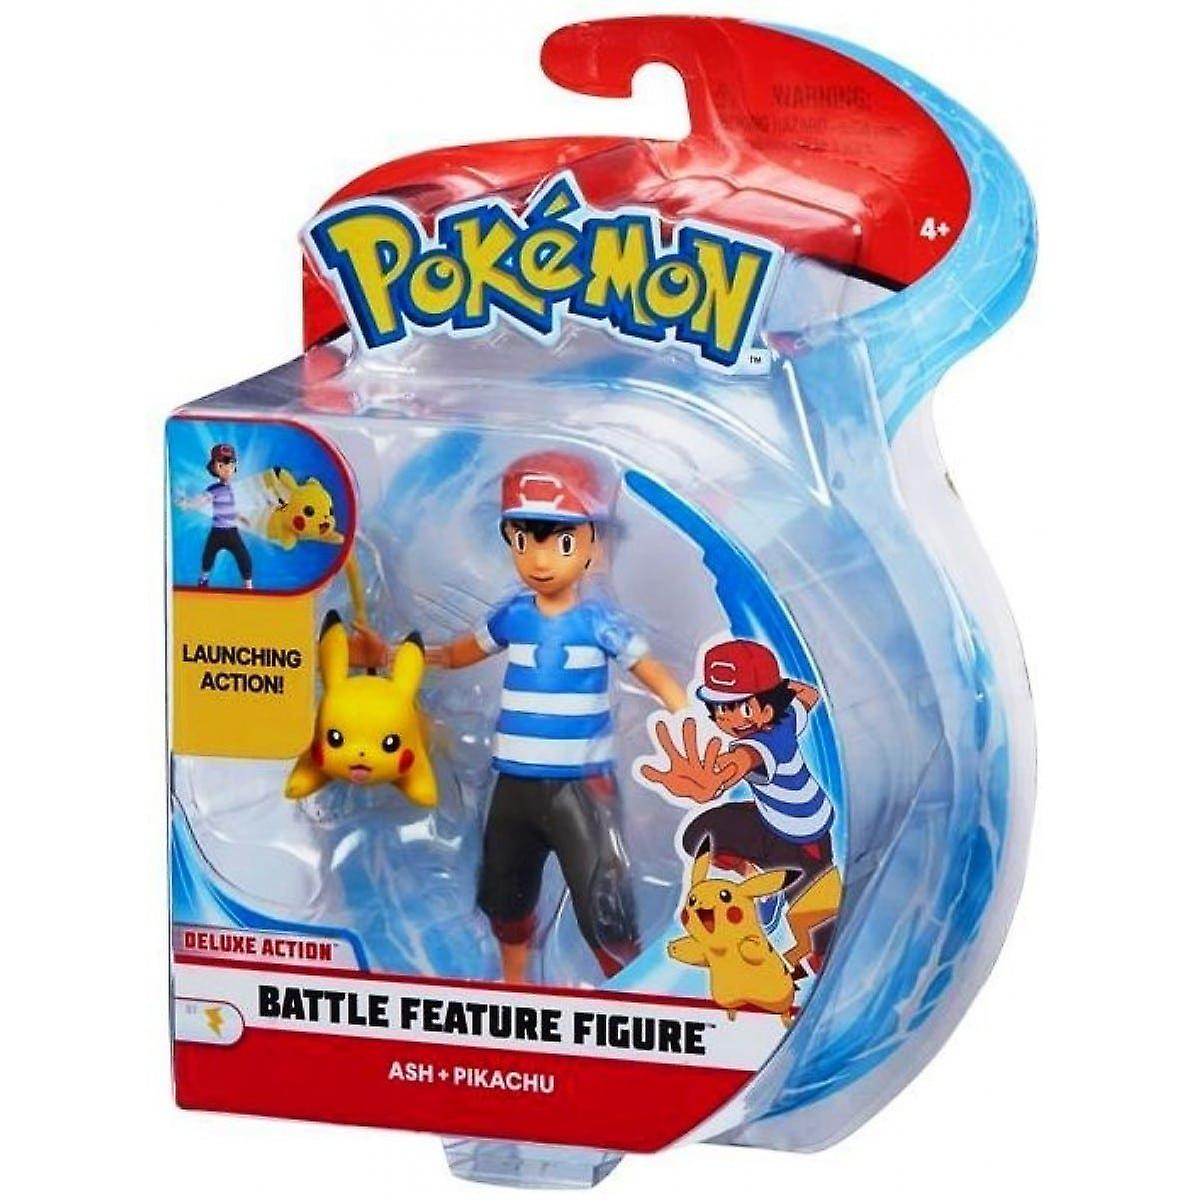 Pokemon Pikachu & Ash Battle Feature Figure